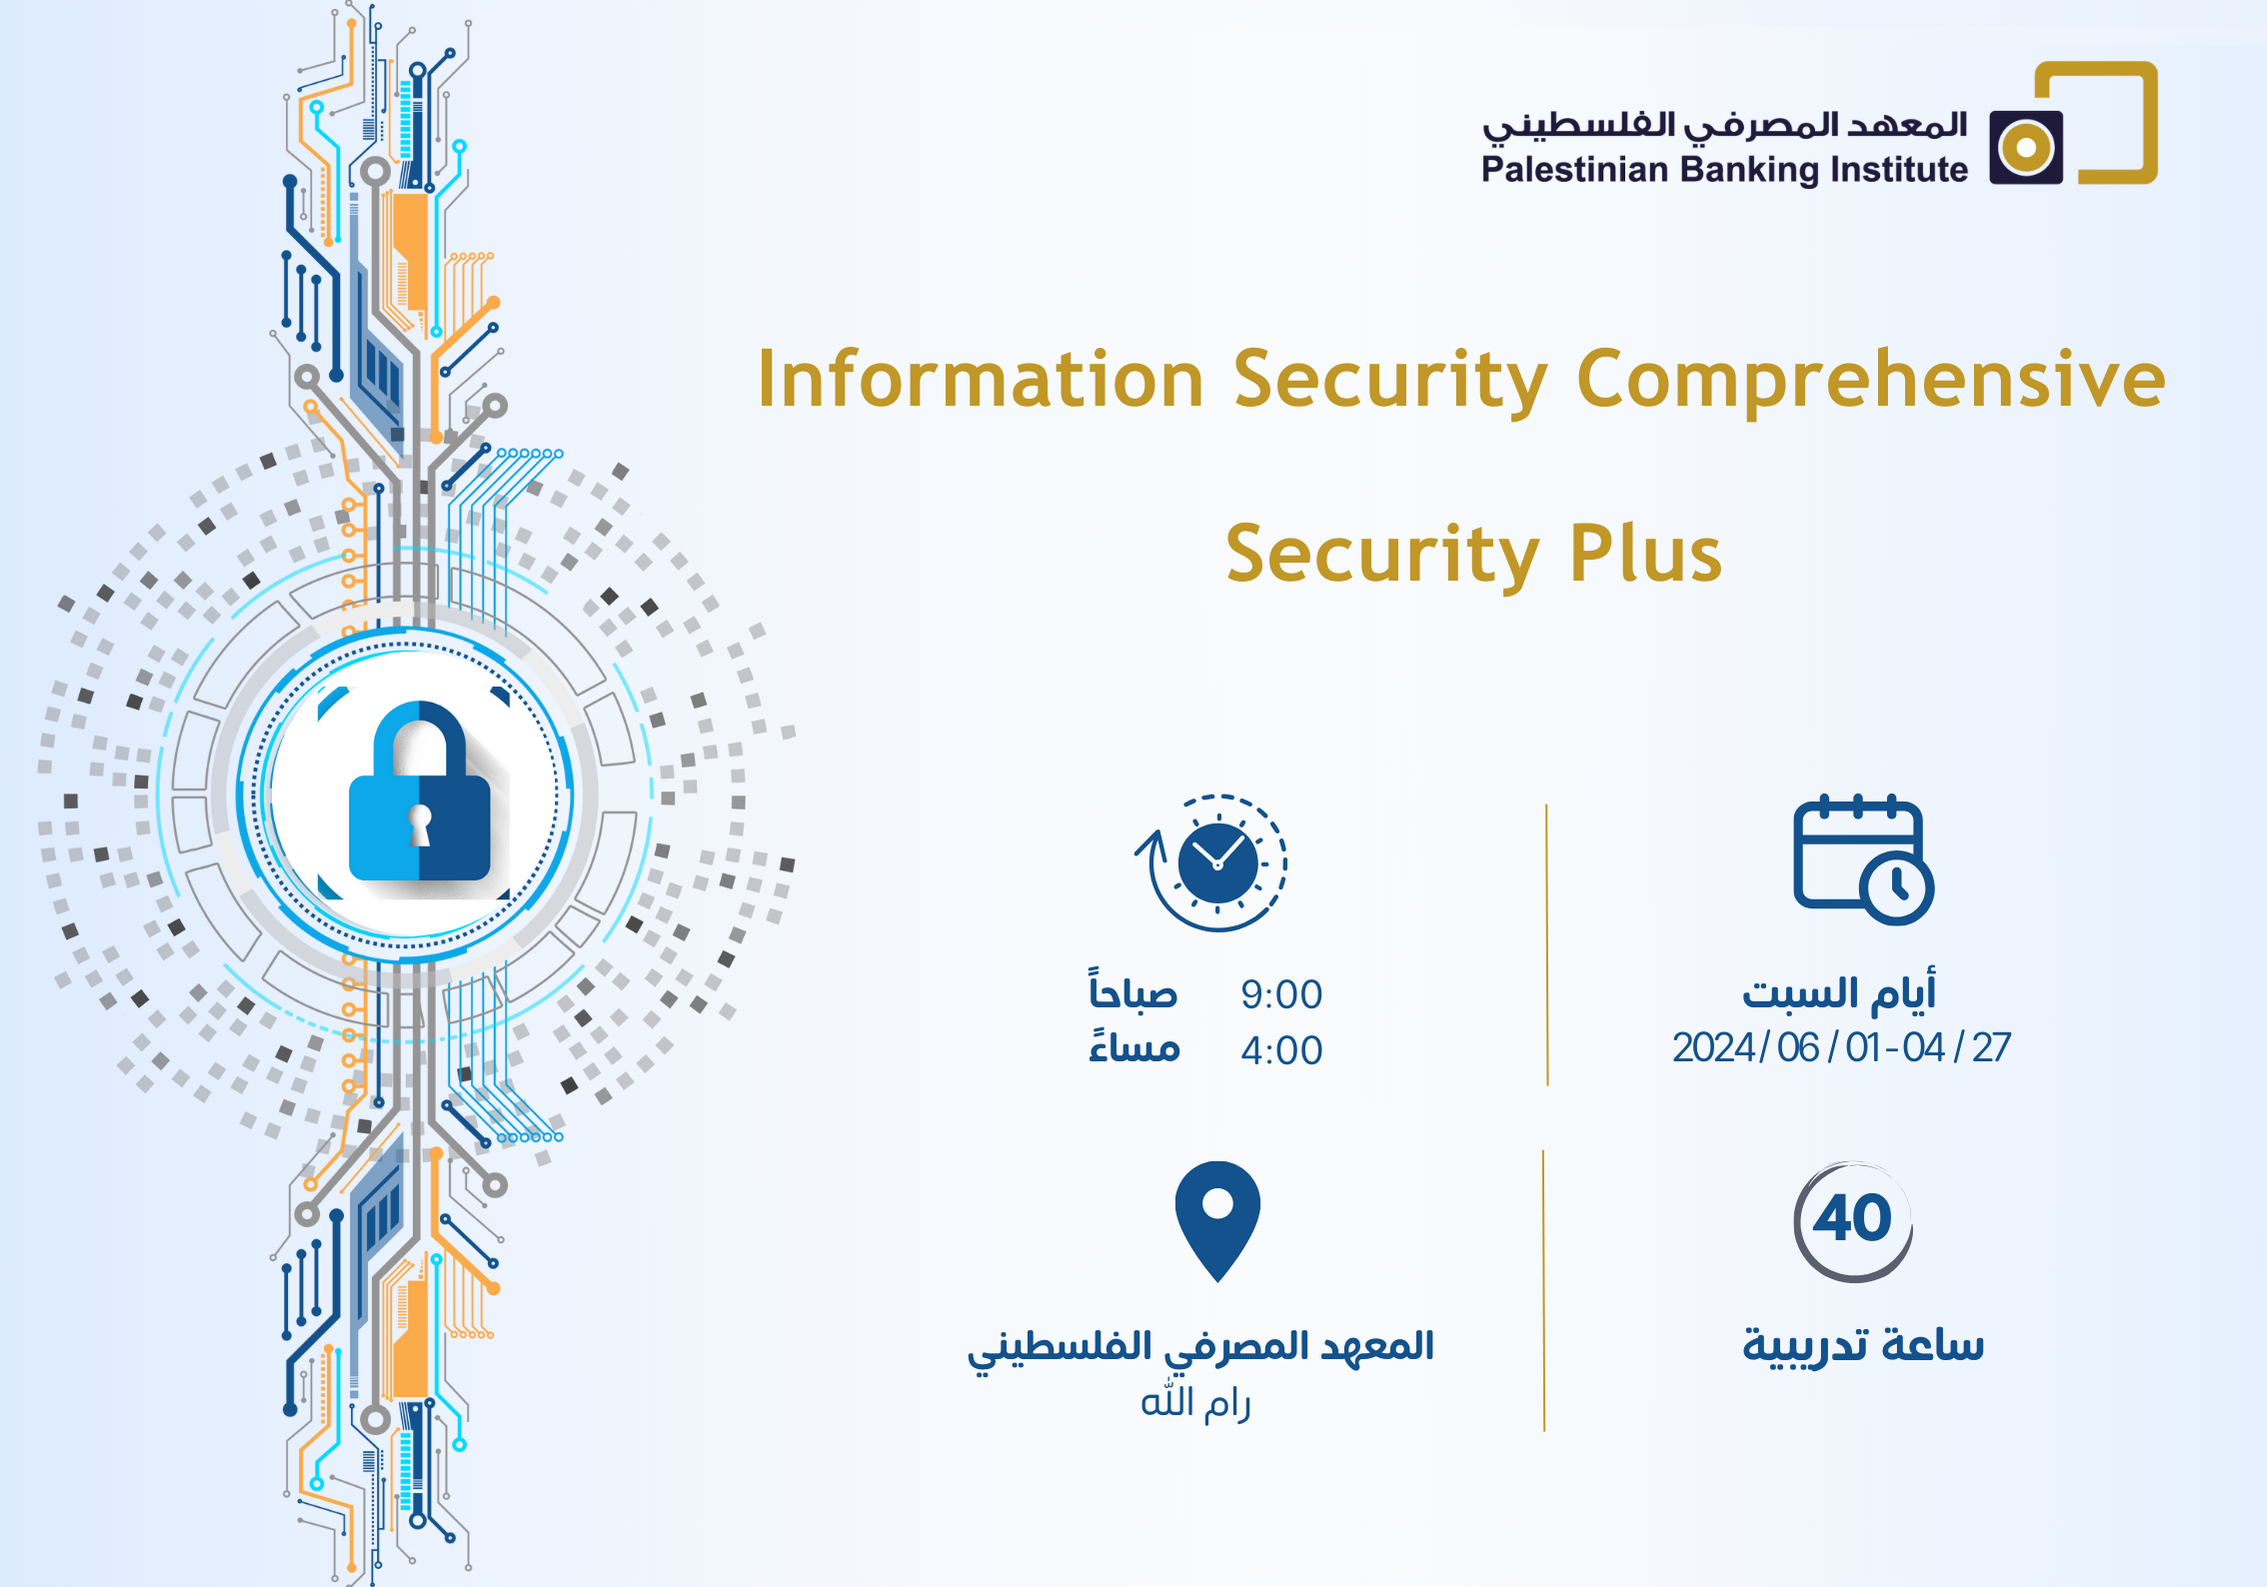 Information Security Comprehensive Training Program – Security Plus